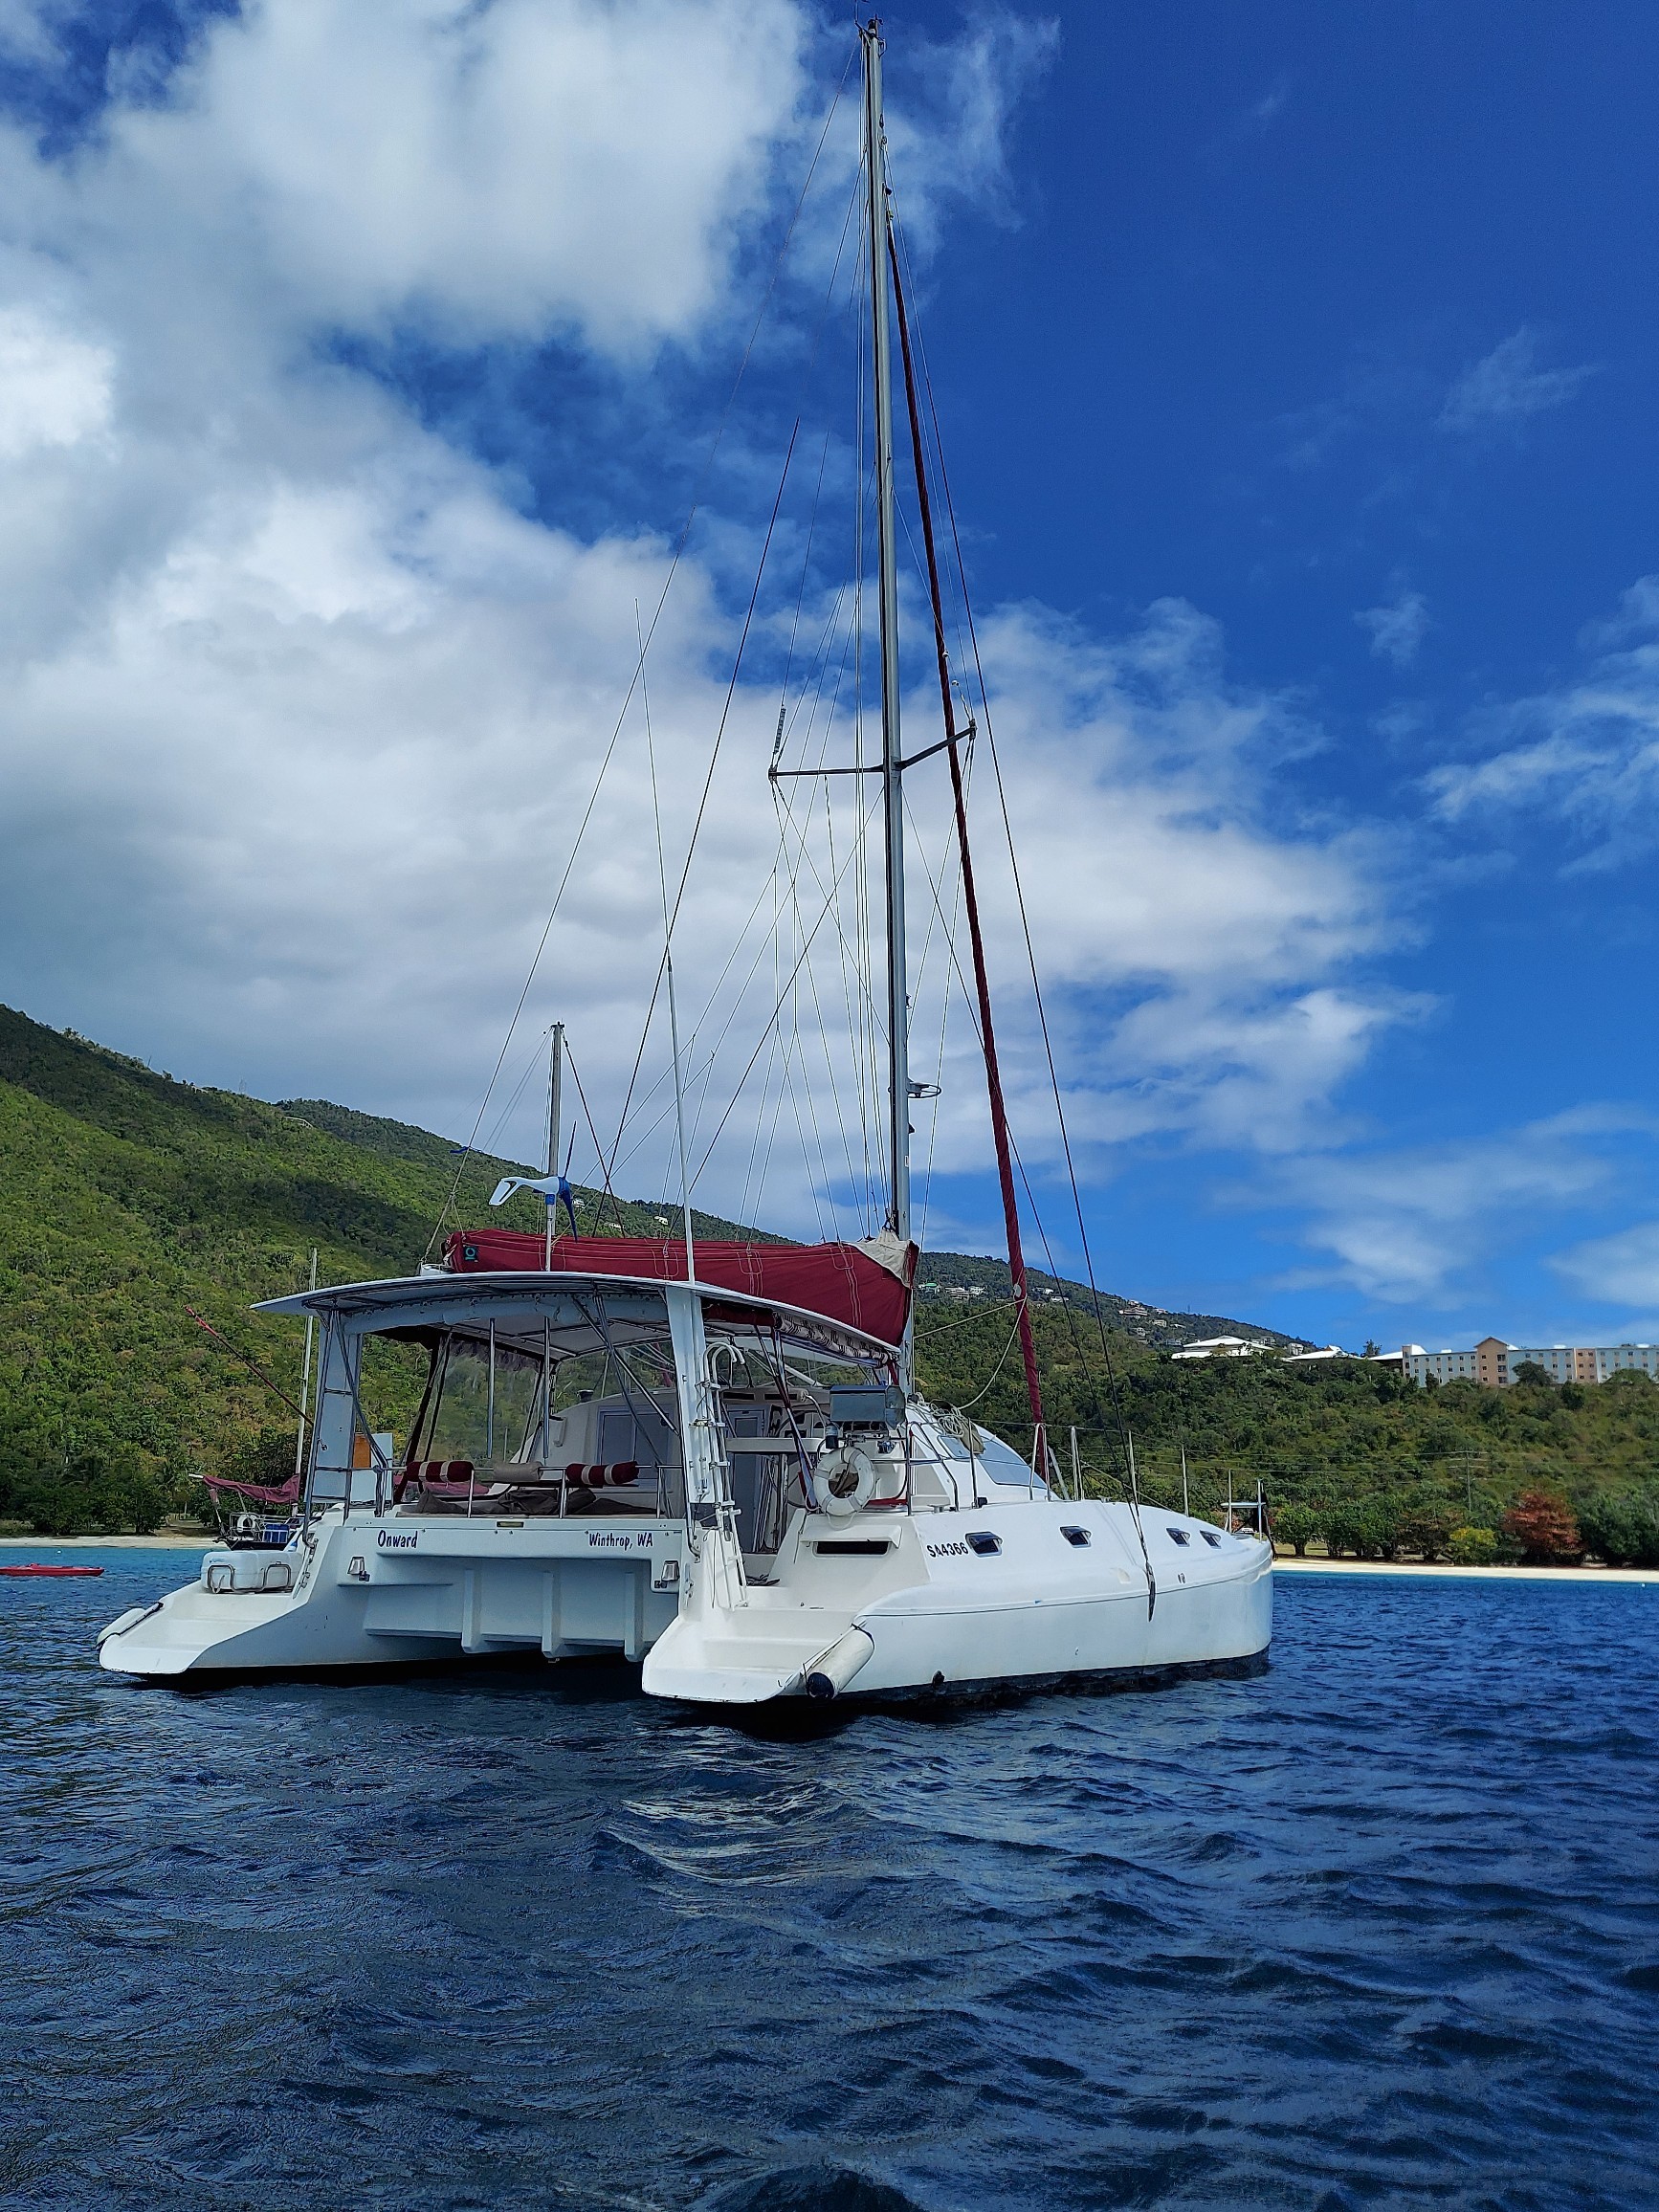 Used Sail Catamaran for Sale 2012 Island Spirit 401 Boat Highlights